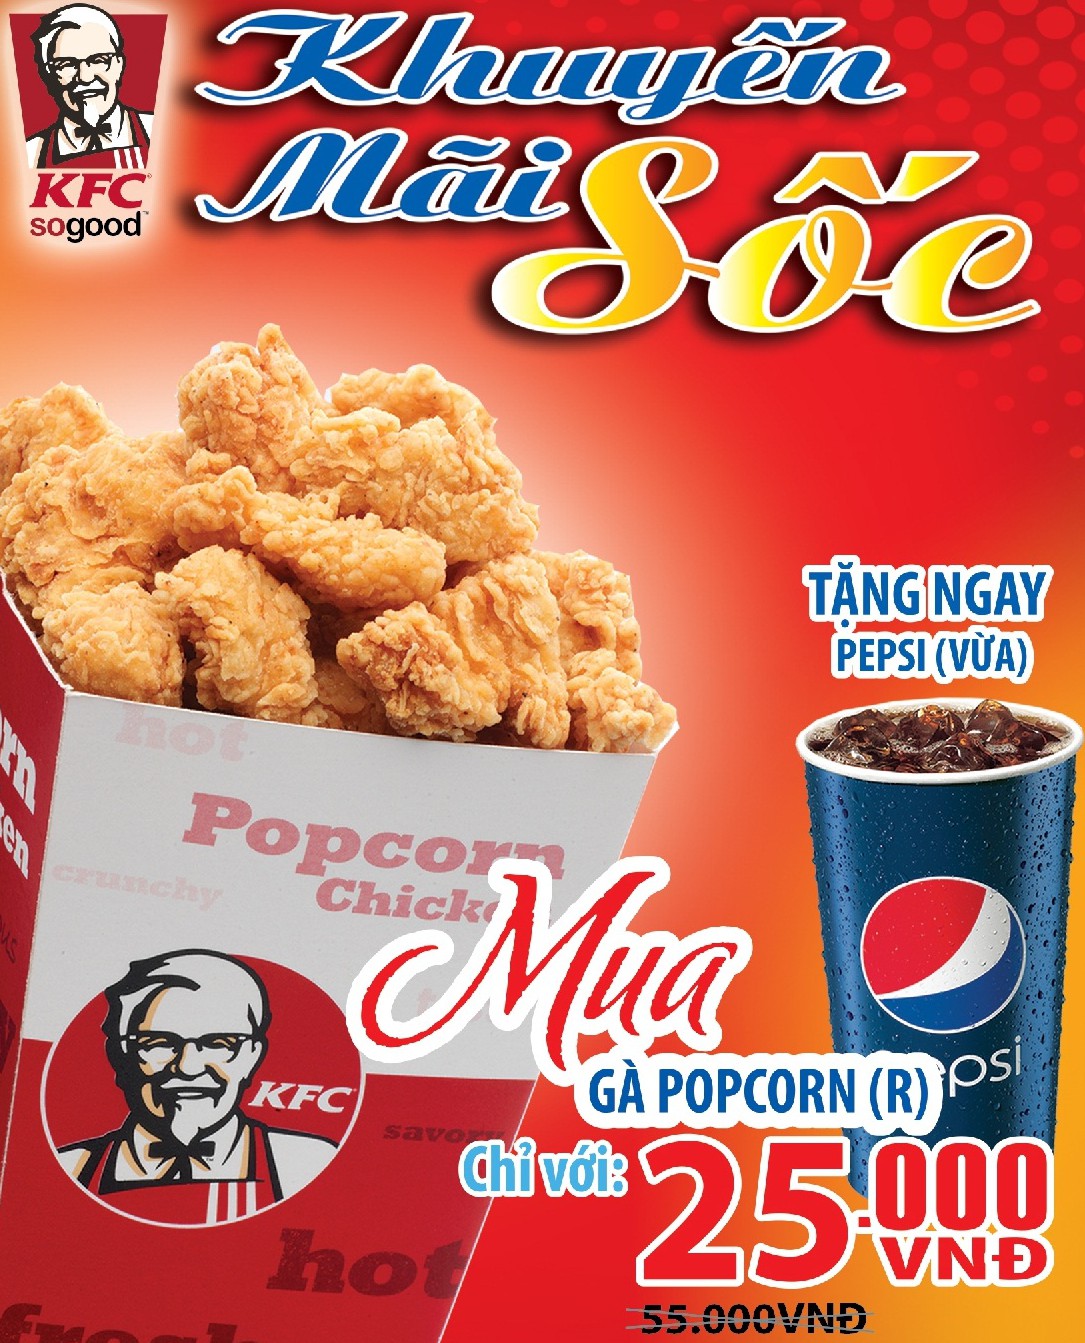 KFC khuyến mãi Pepsi khi mua gà